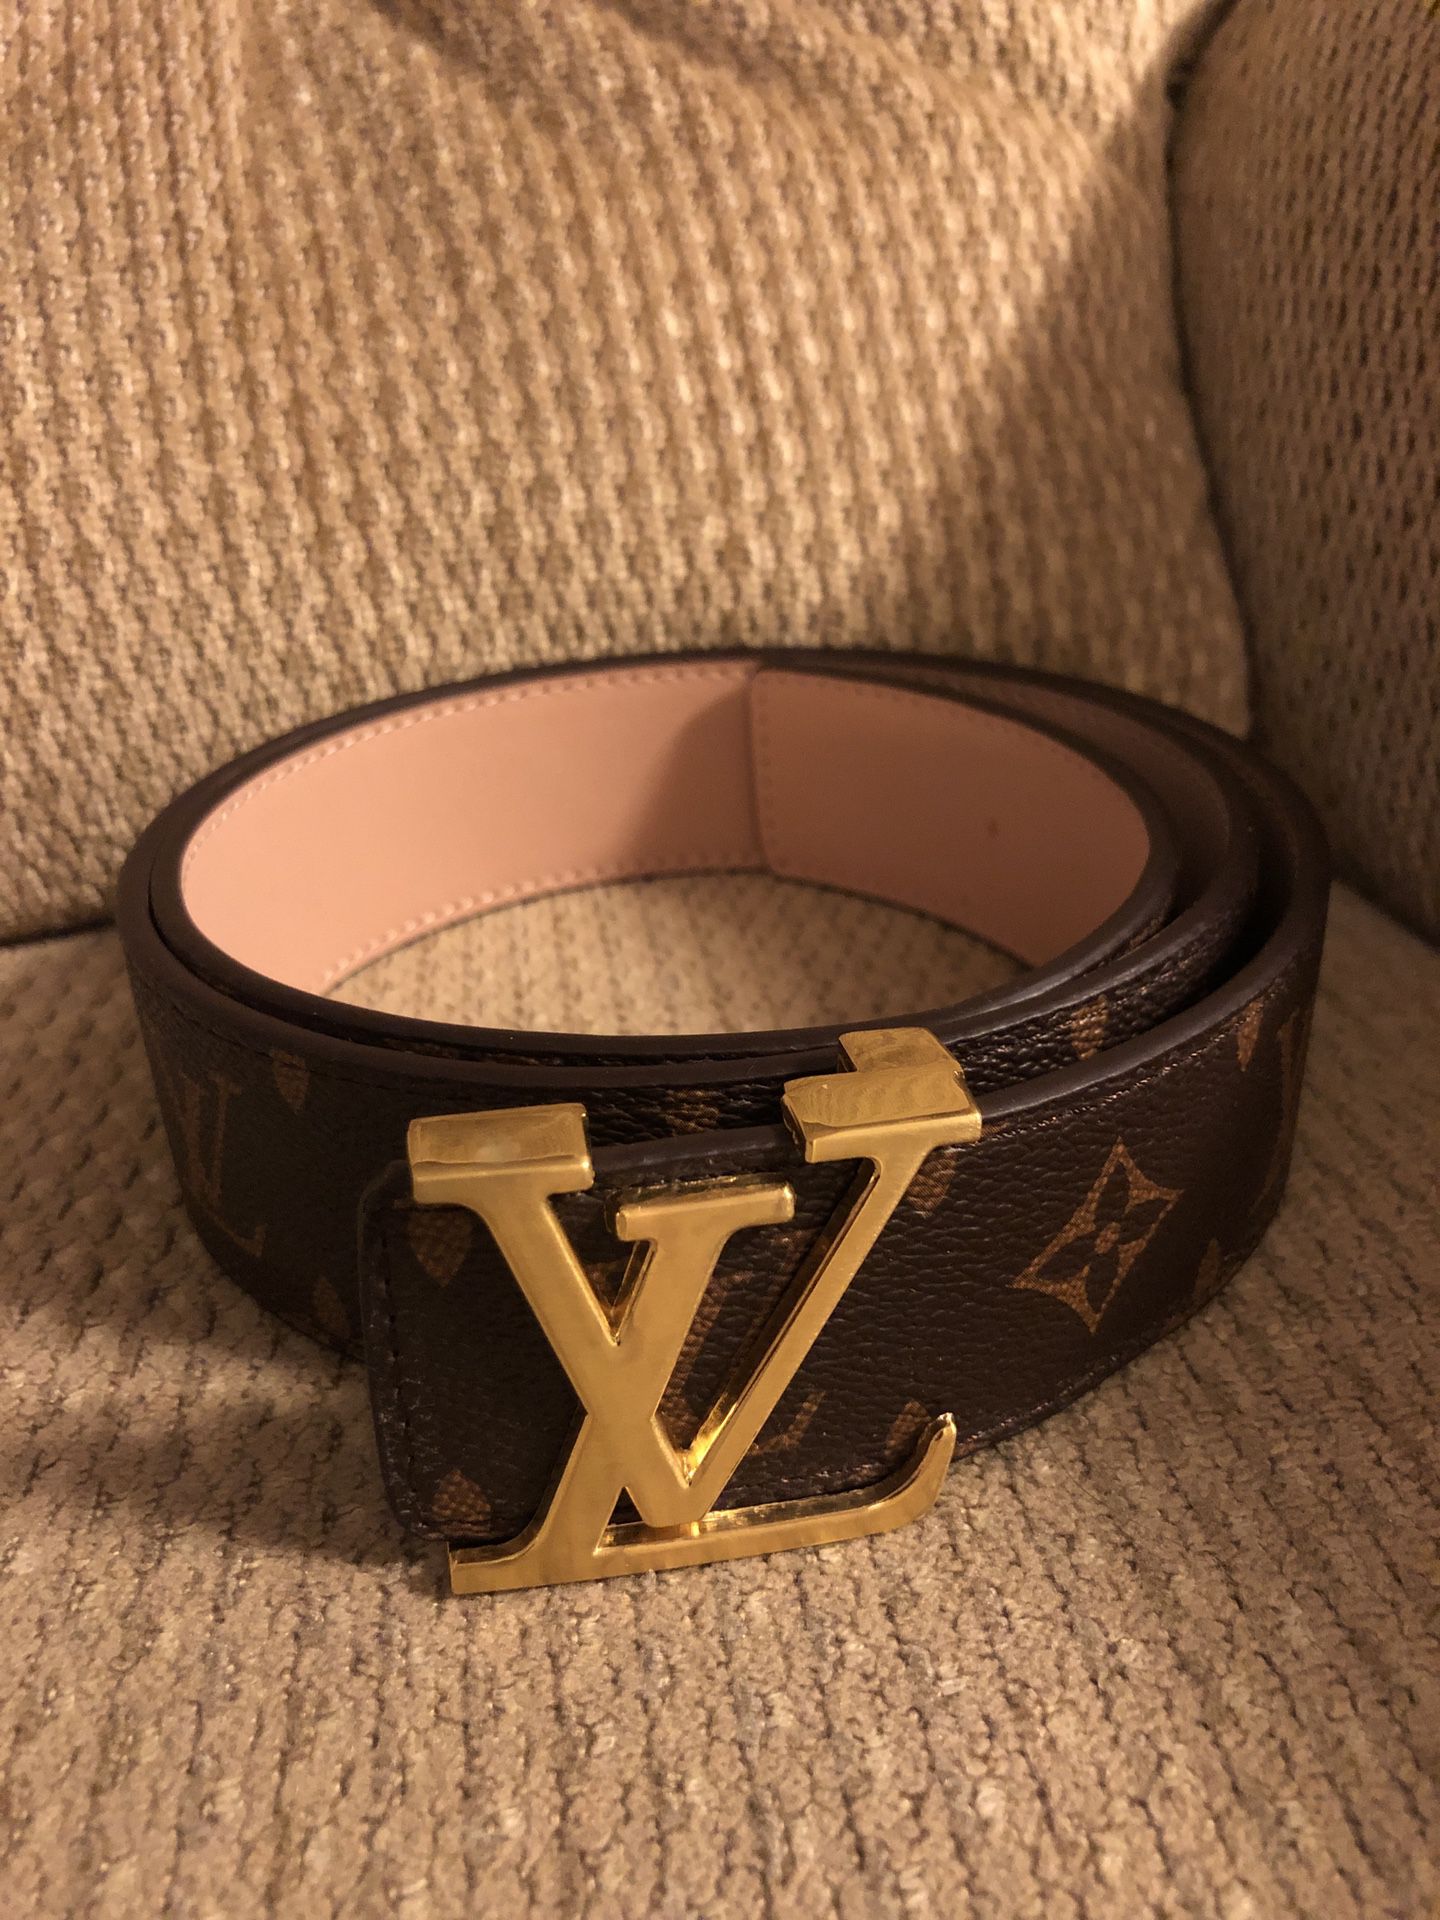 New leather belt